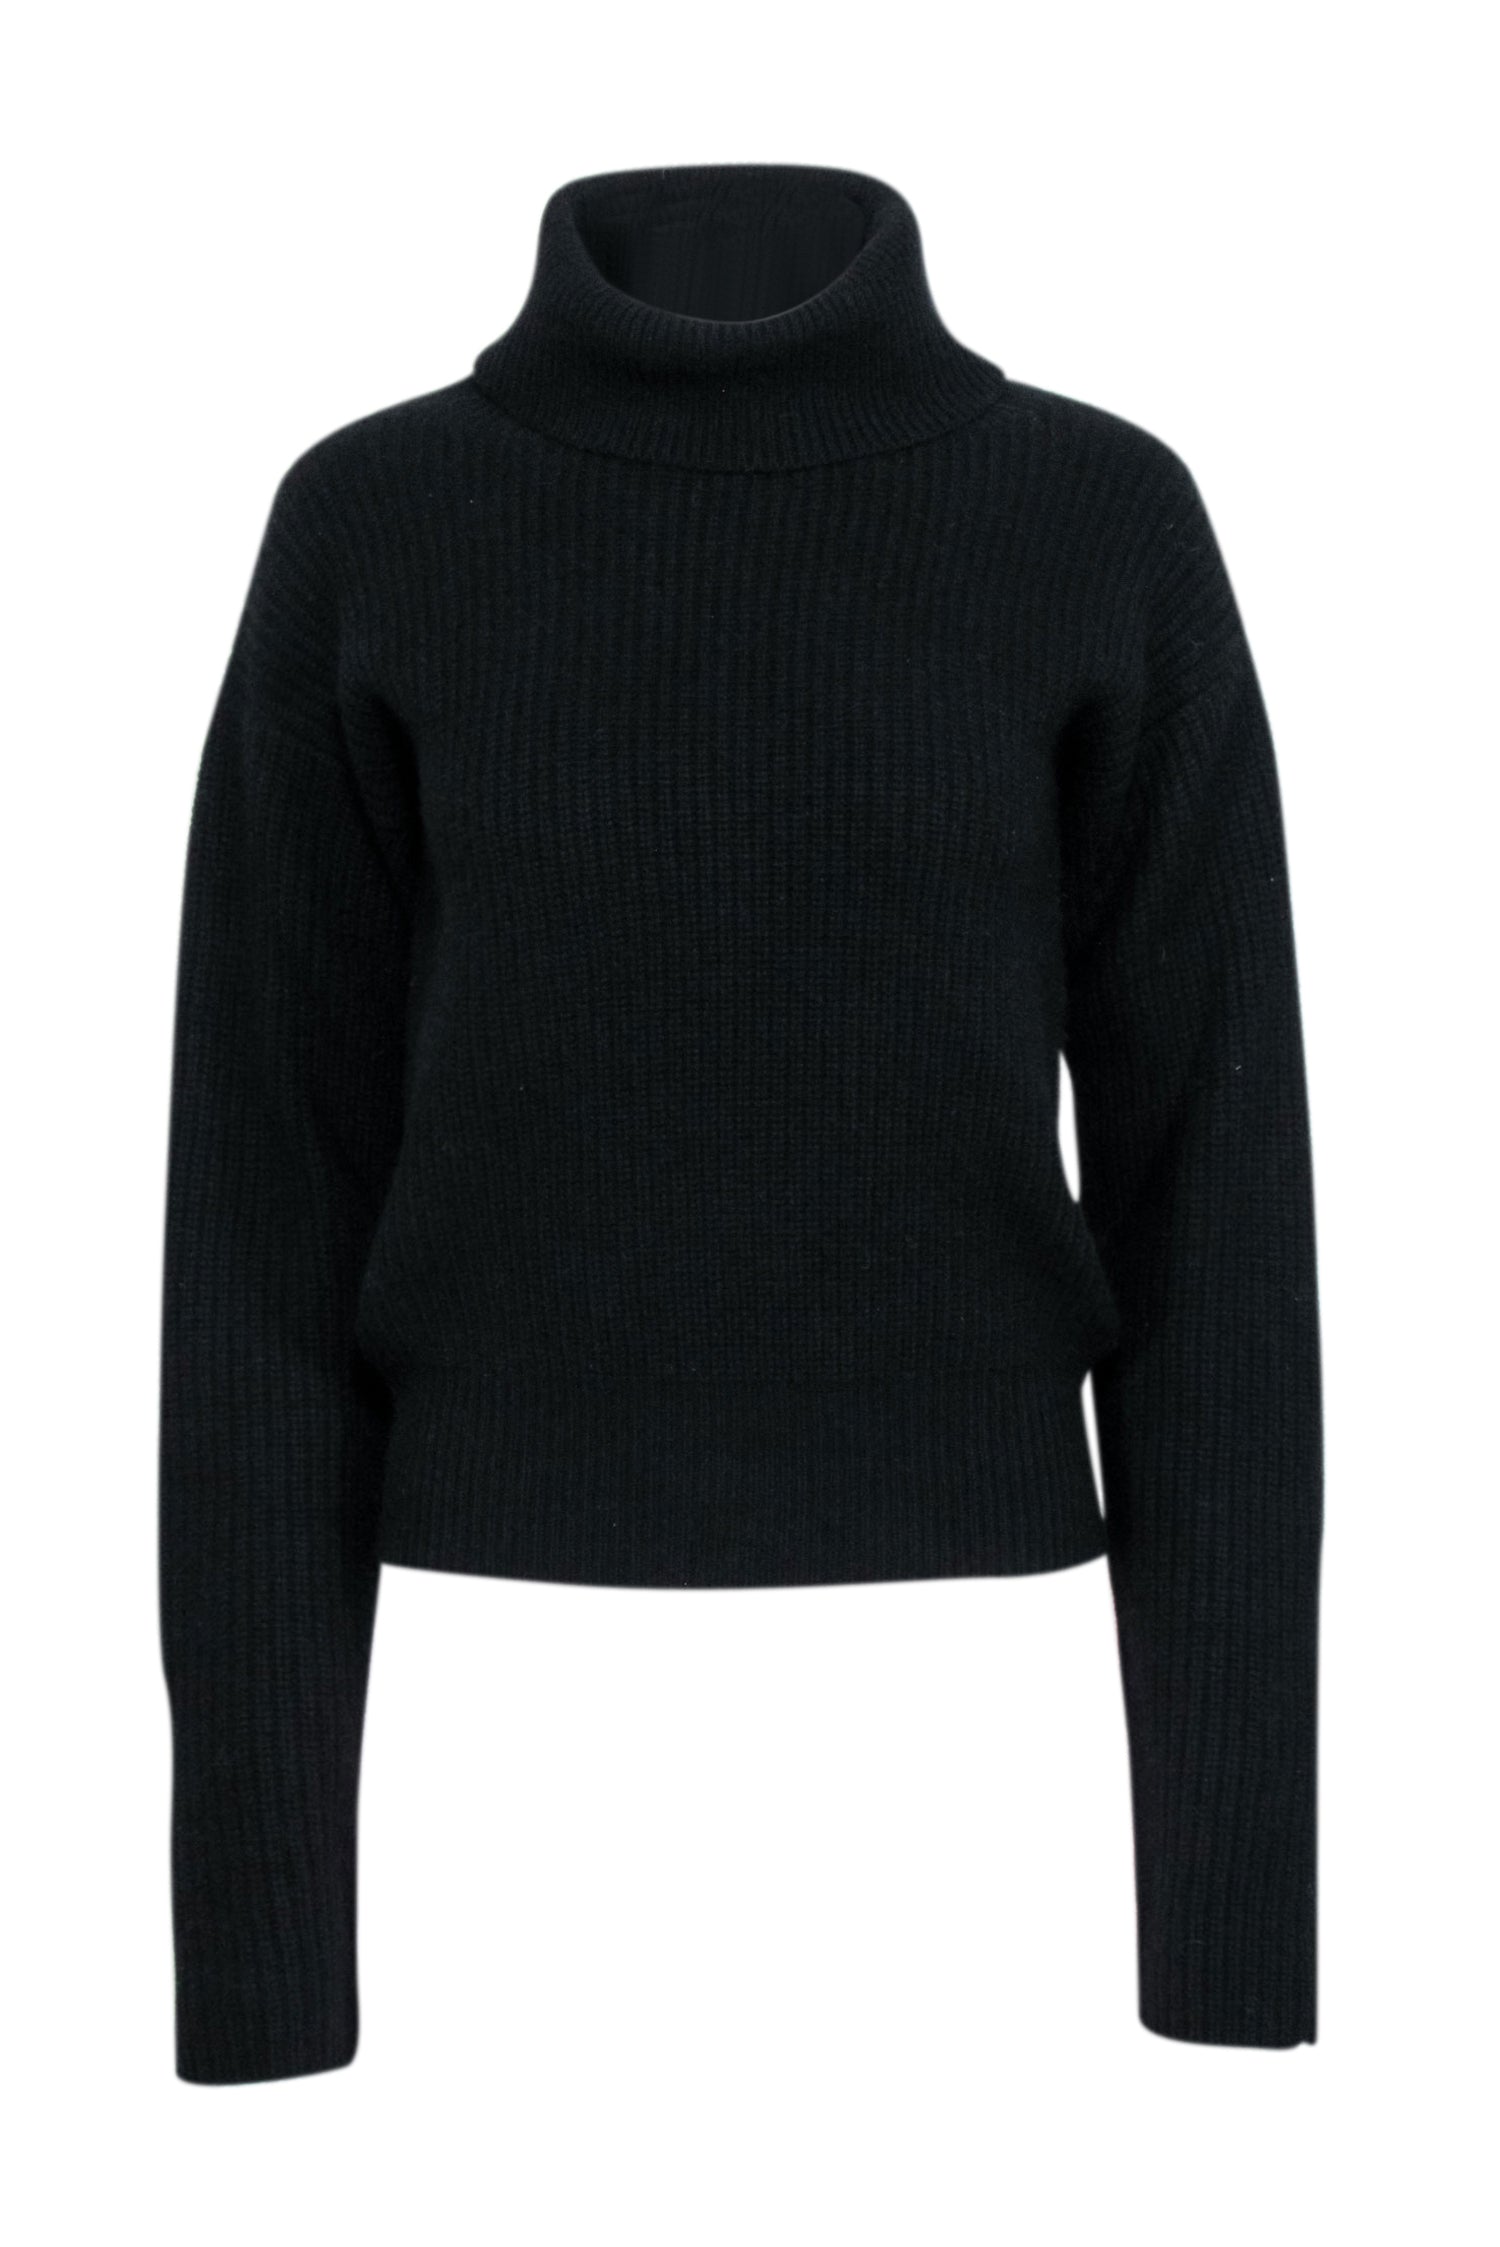 Generation Love - Black Wool & Cashmere Blend Turtleneck w/ Buttoned Sleeves Sz S